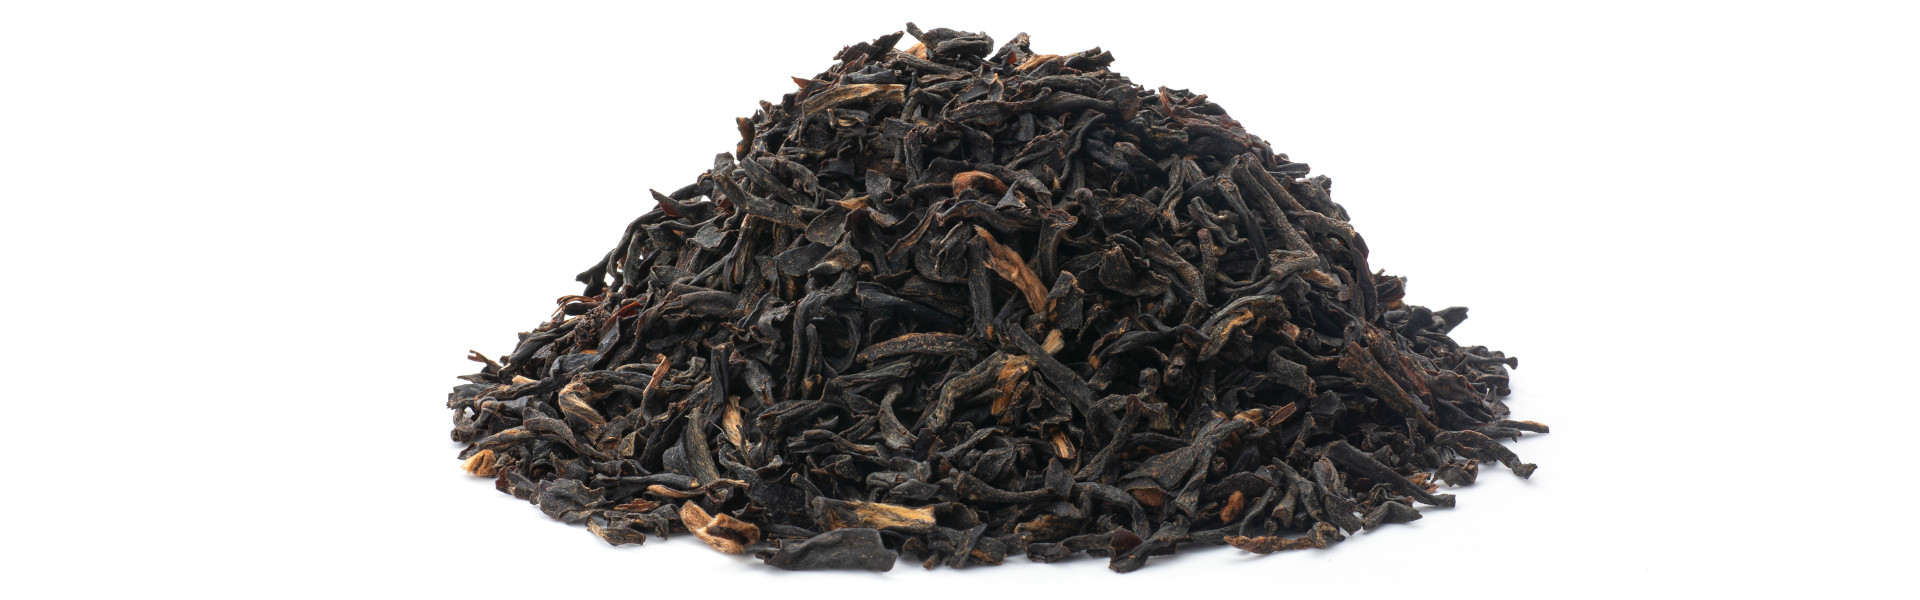 Herbal Republic Assam STGFOP1 Tea